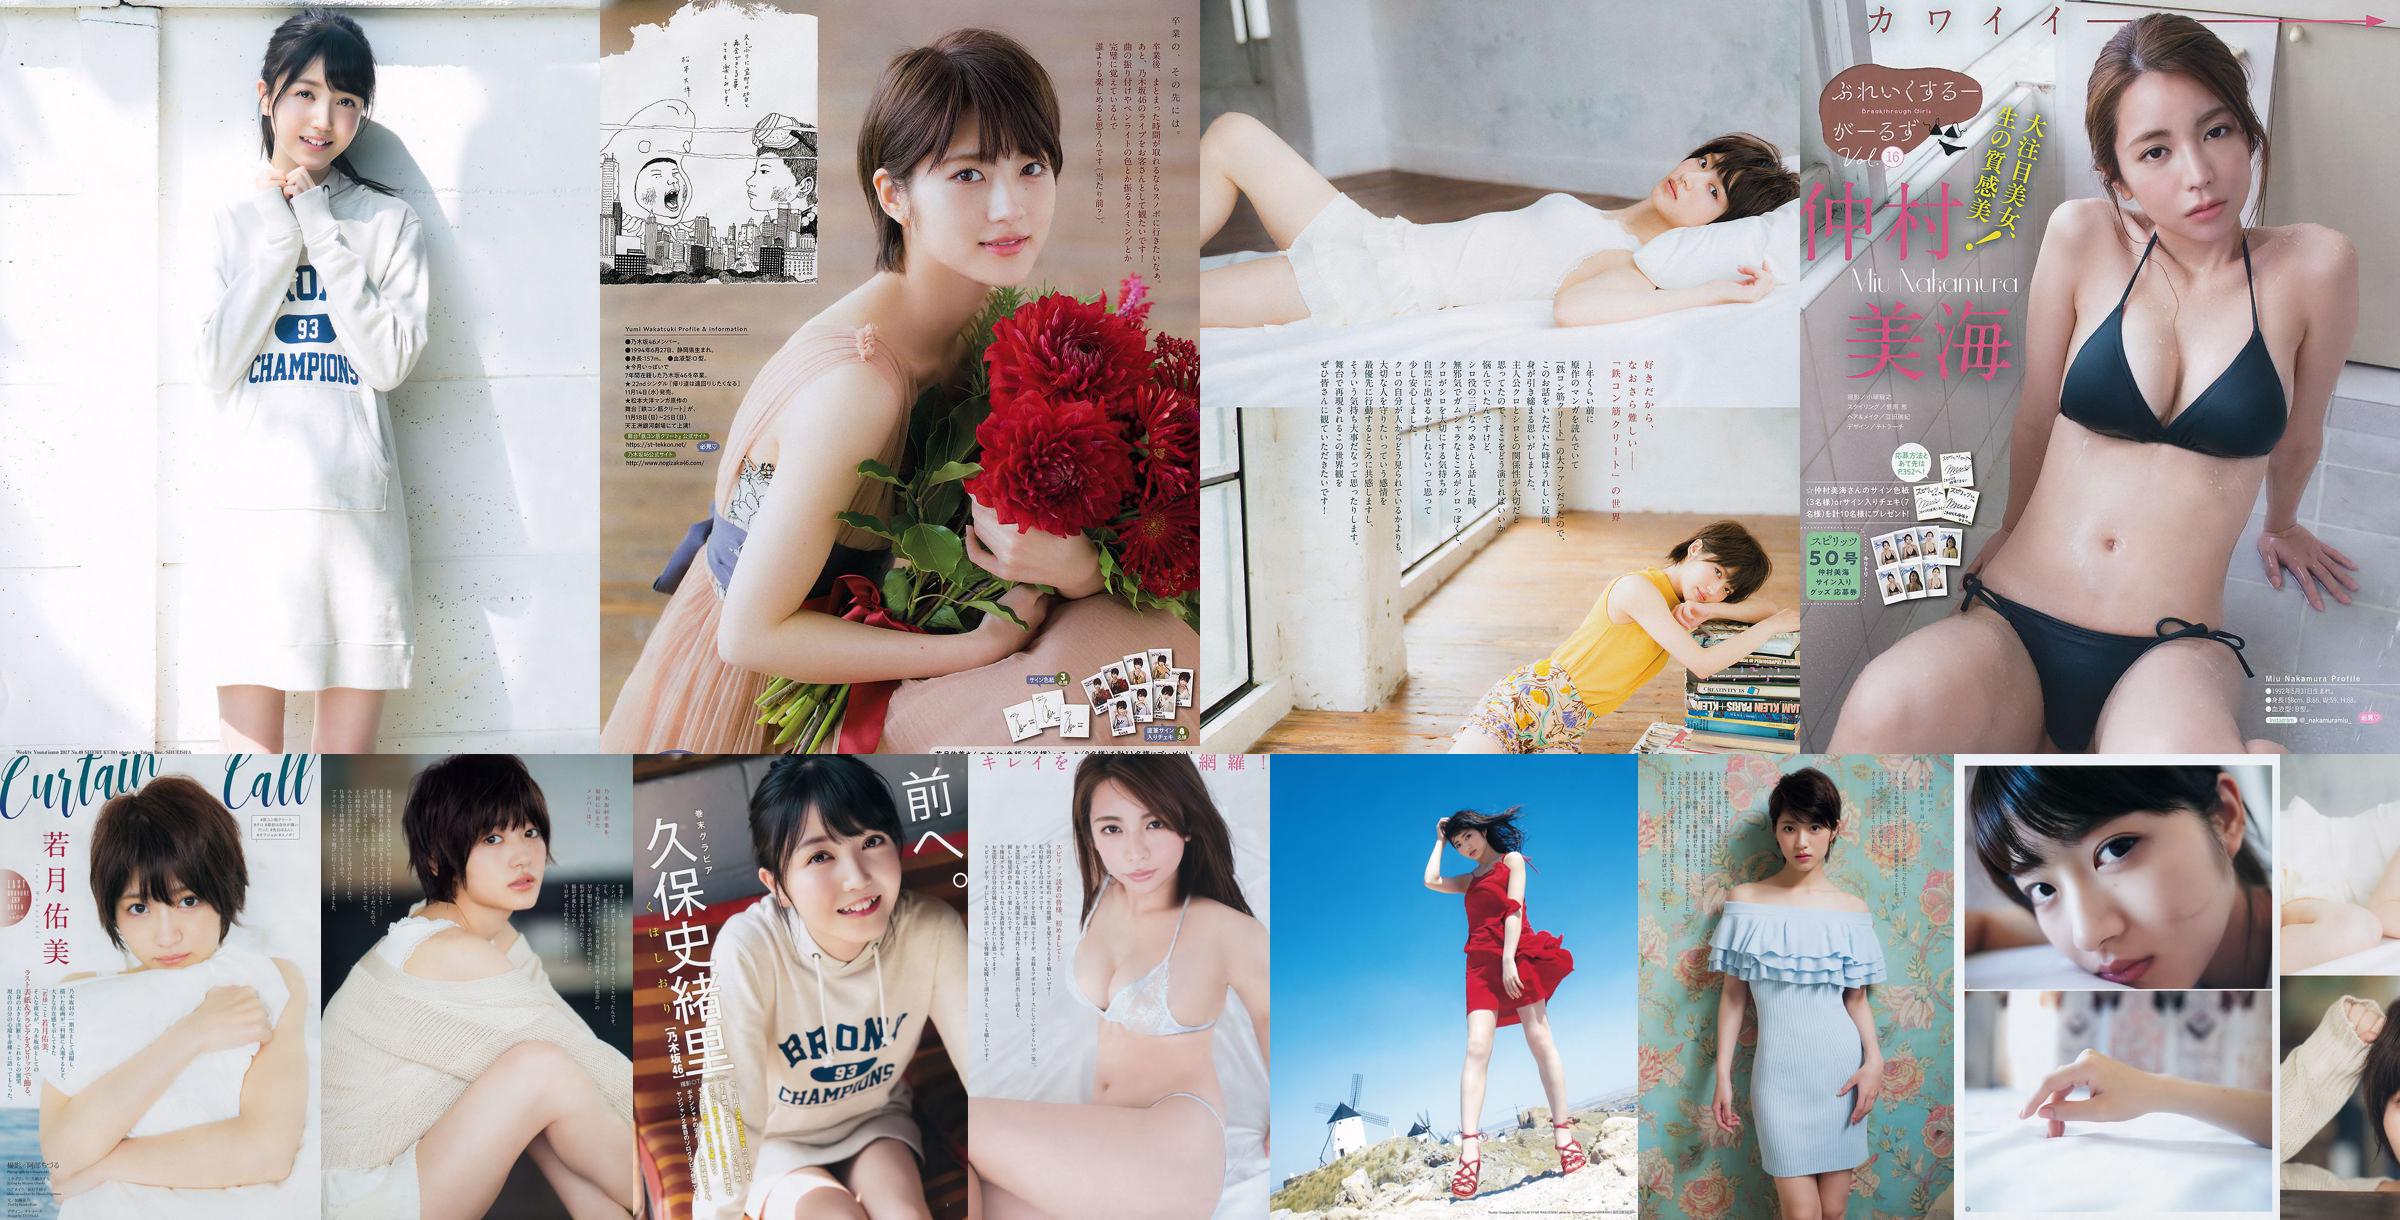 [Grands esprits de la bande dessinée hebdomadaire] Wakazuki Yumi Nakamura Mihai 2018 Magazine photo n ° 50 No.705b9c Page 5